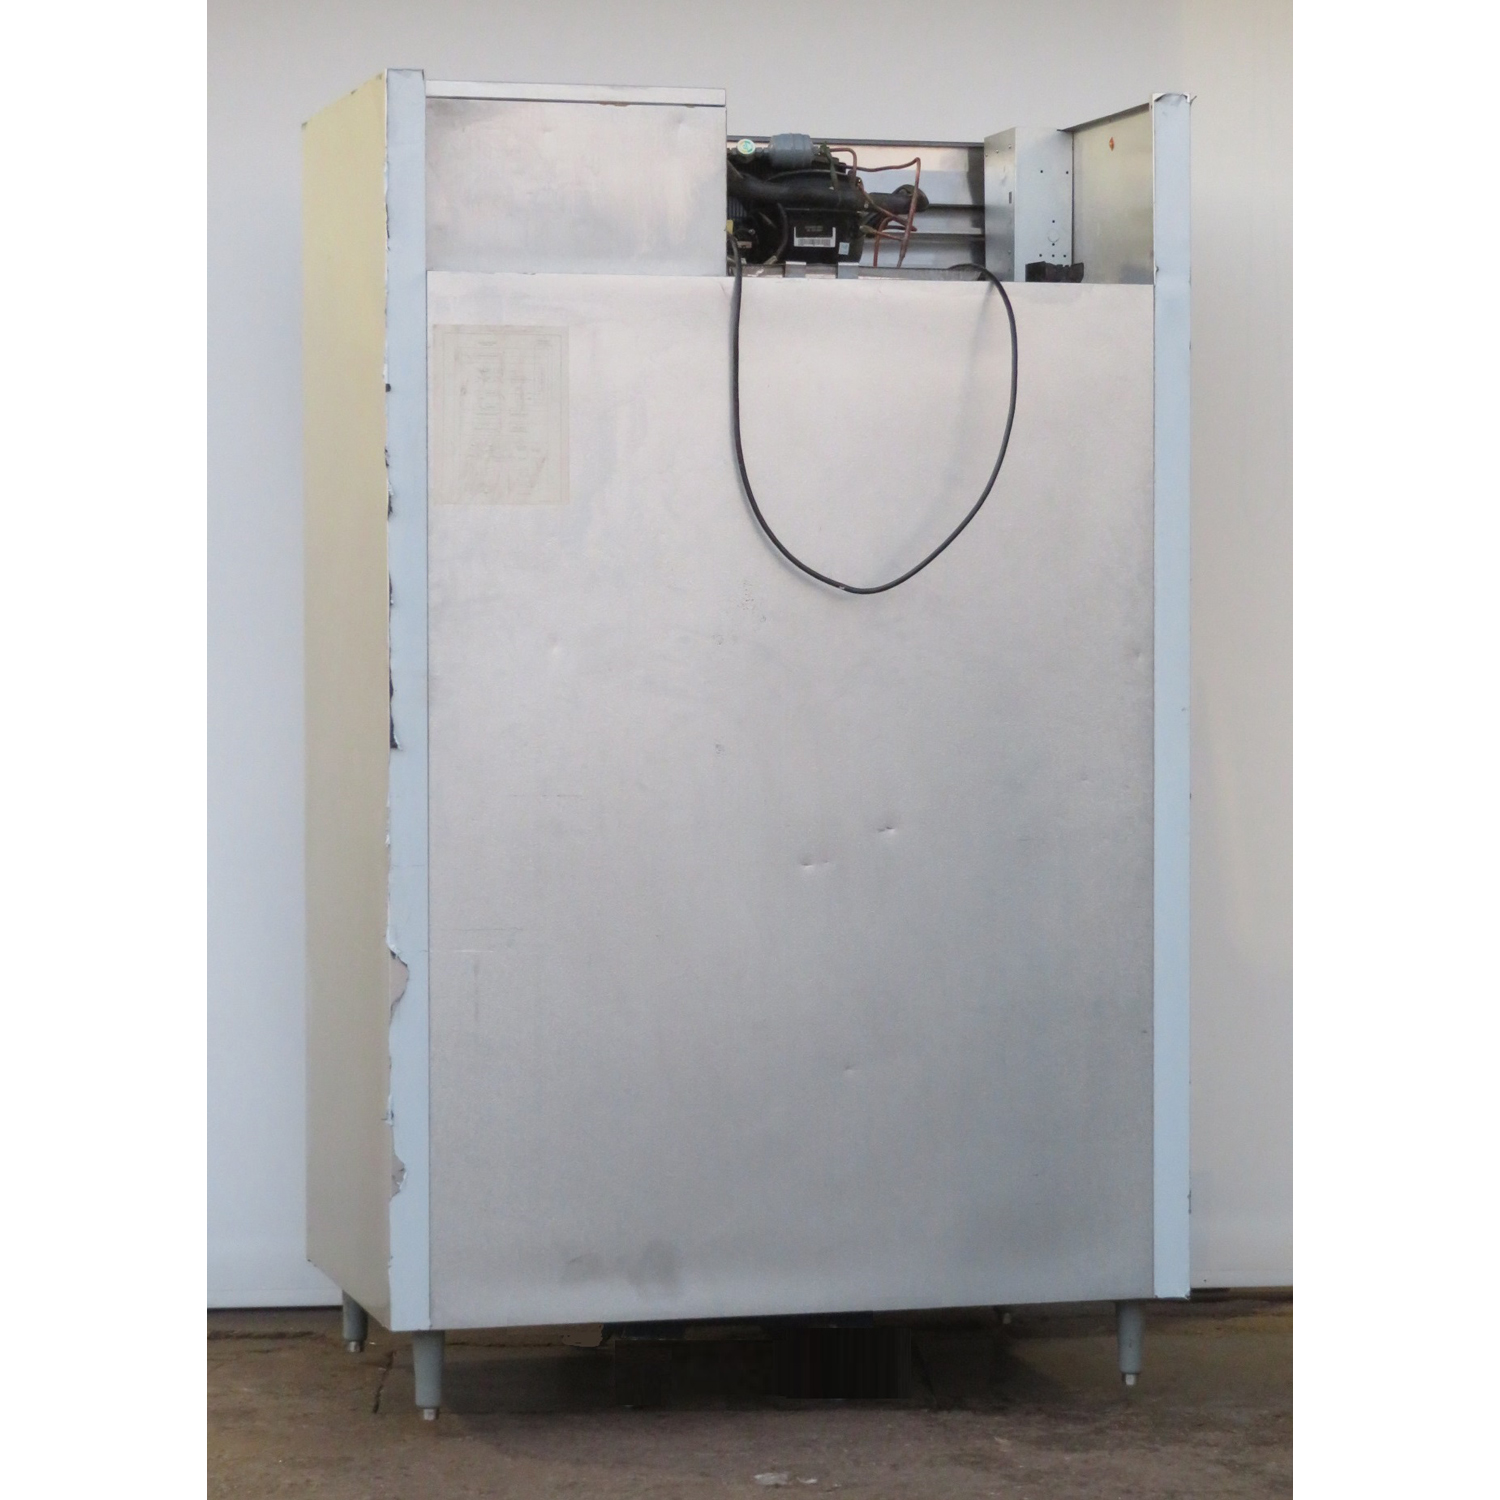 Traulsen G20000 Refrigerator 2 Section Half Door, Used Great Condition image 2